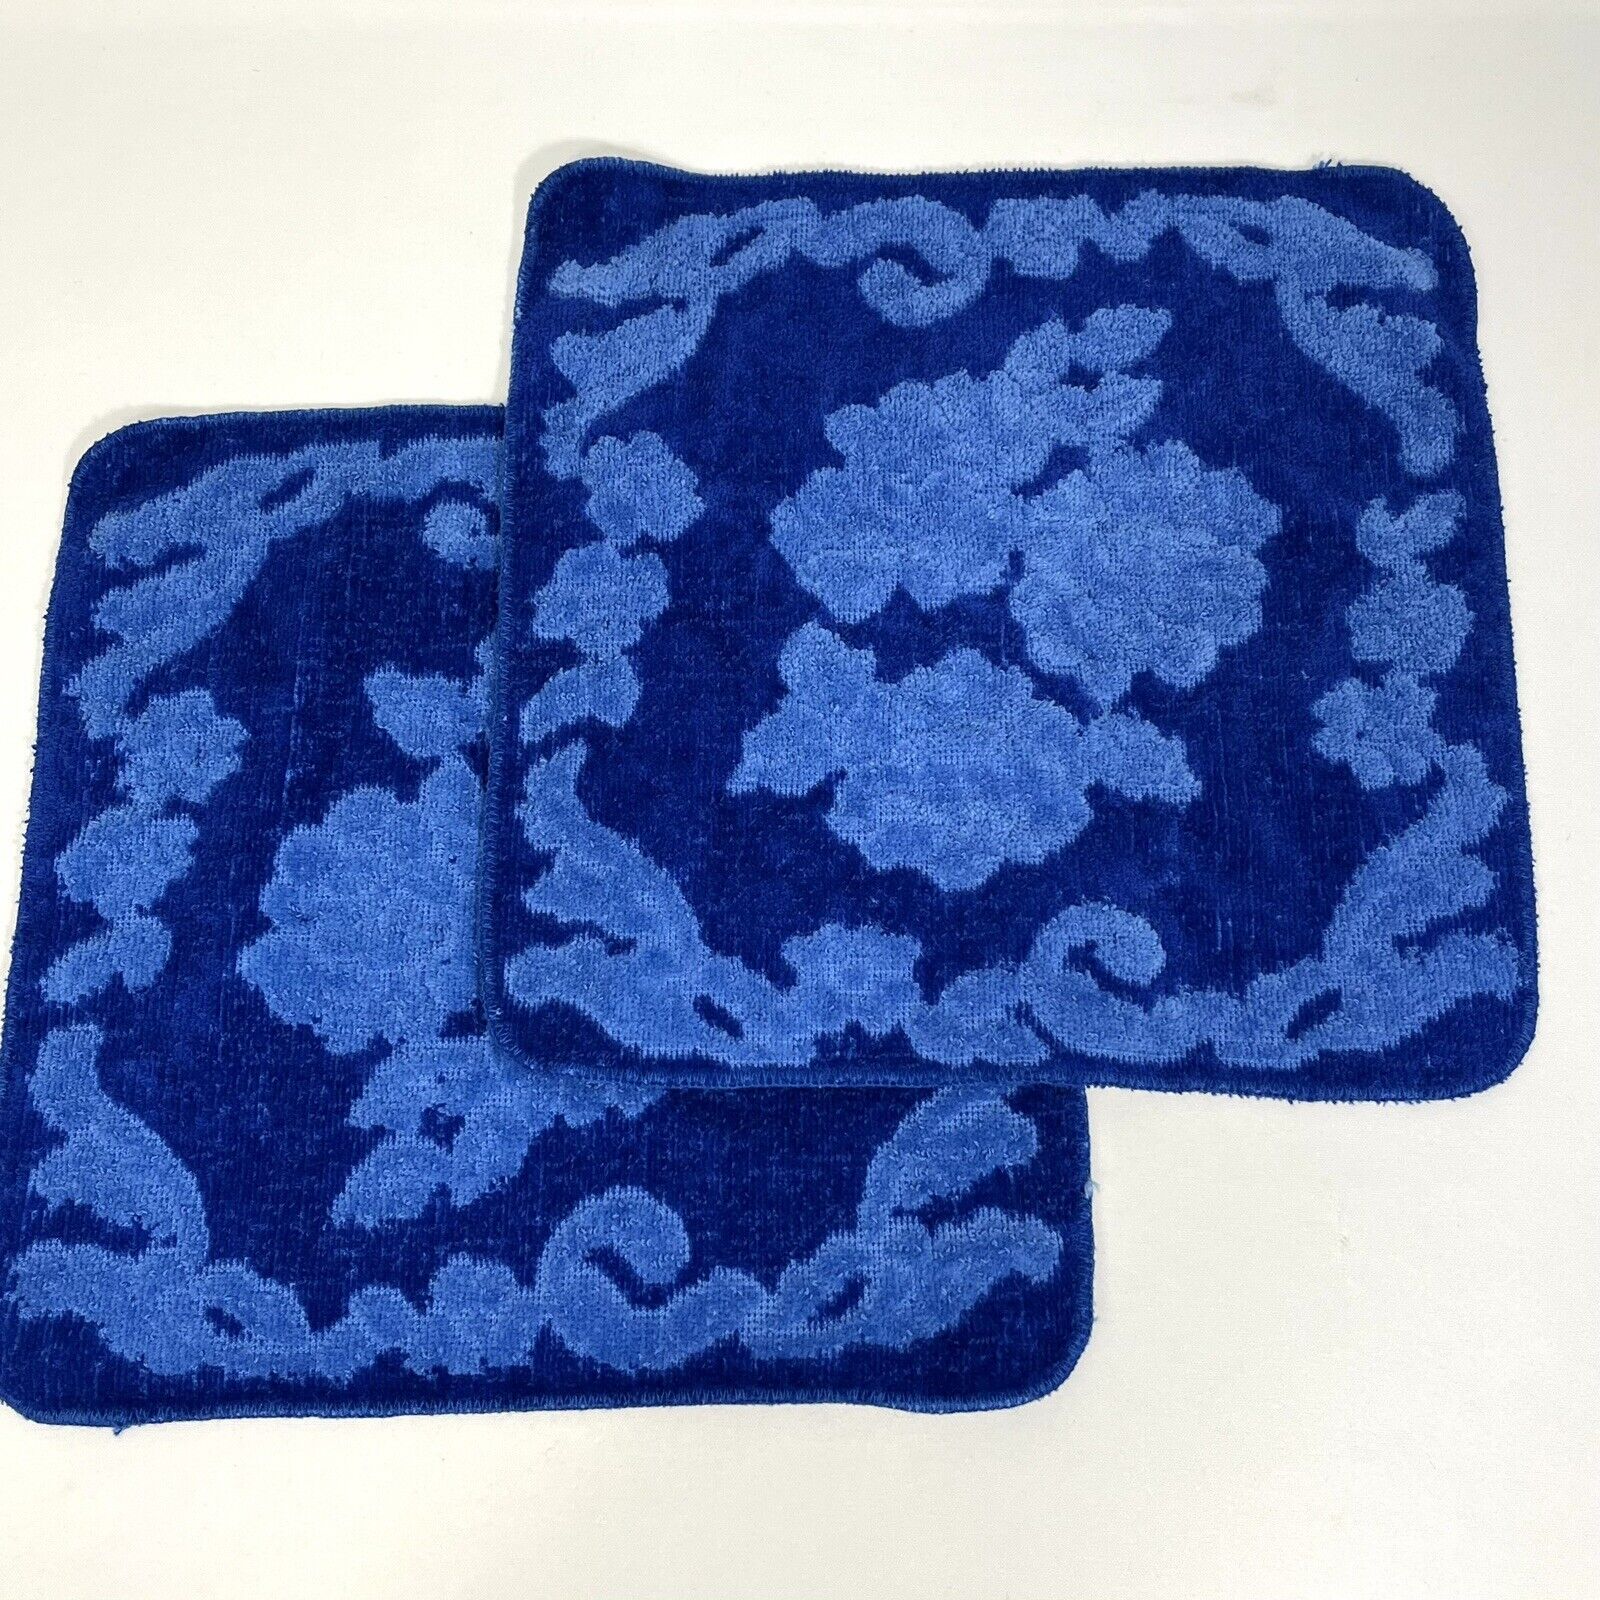 Cannon Monticello Washcloths Blue Sculpted Floral Ornate 12x12 Set of 2 Vintage